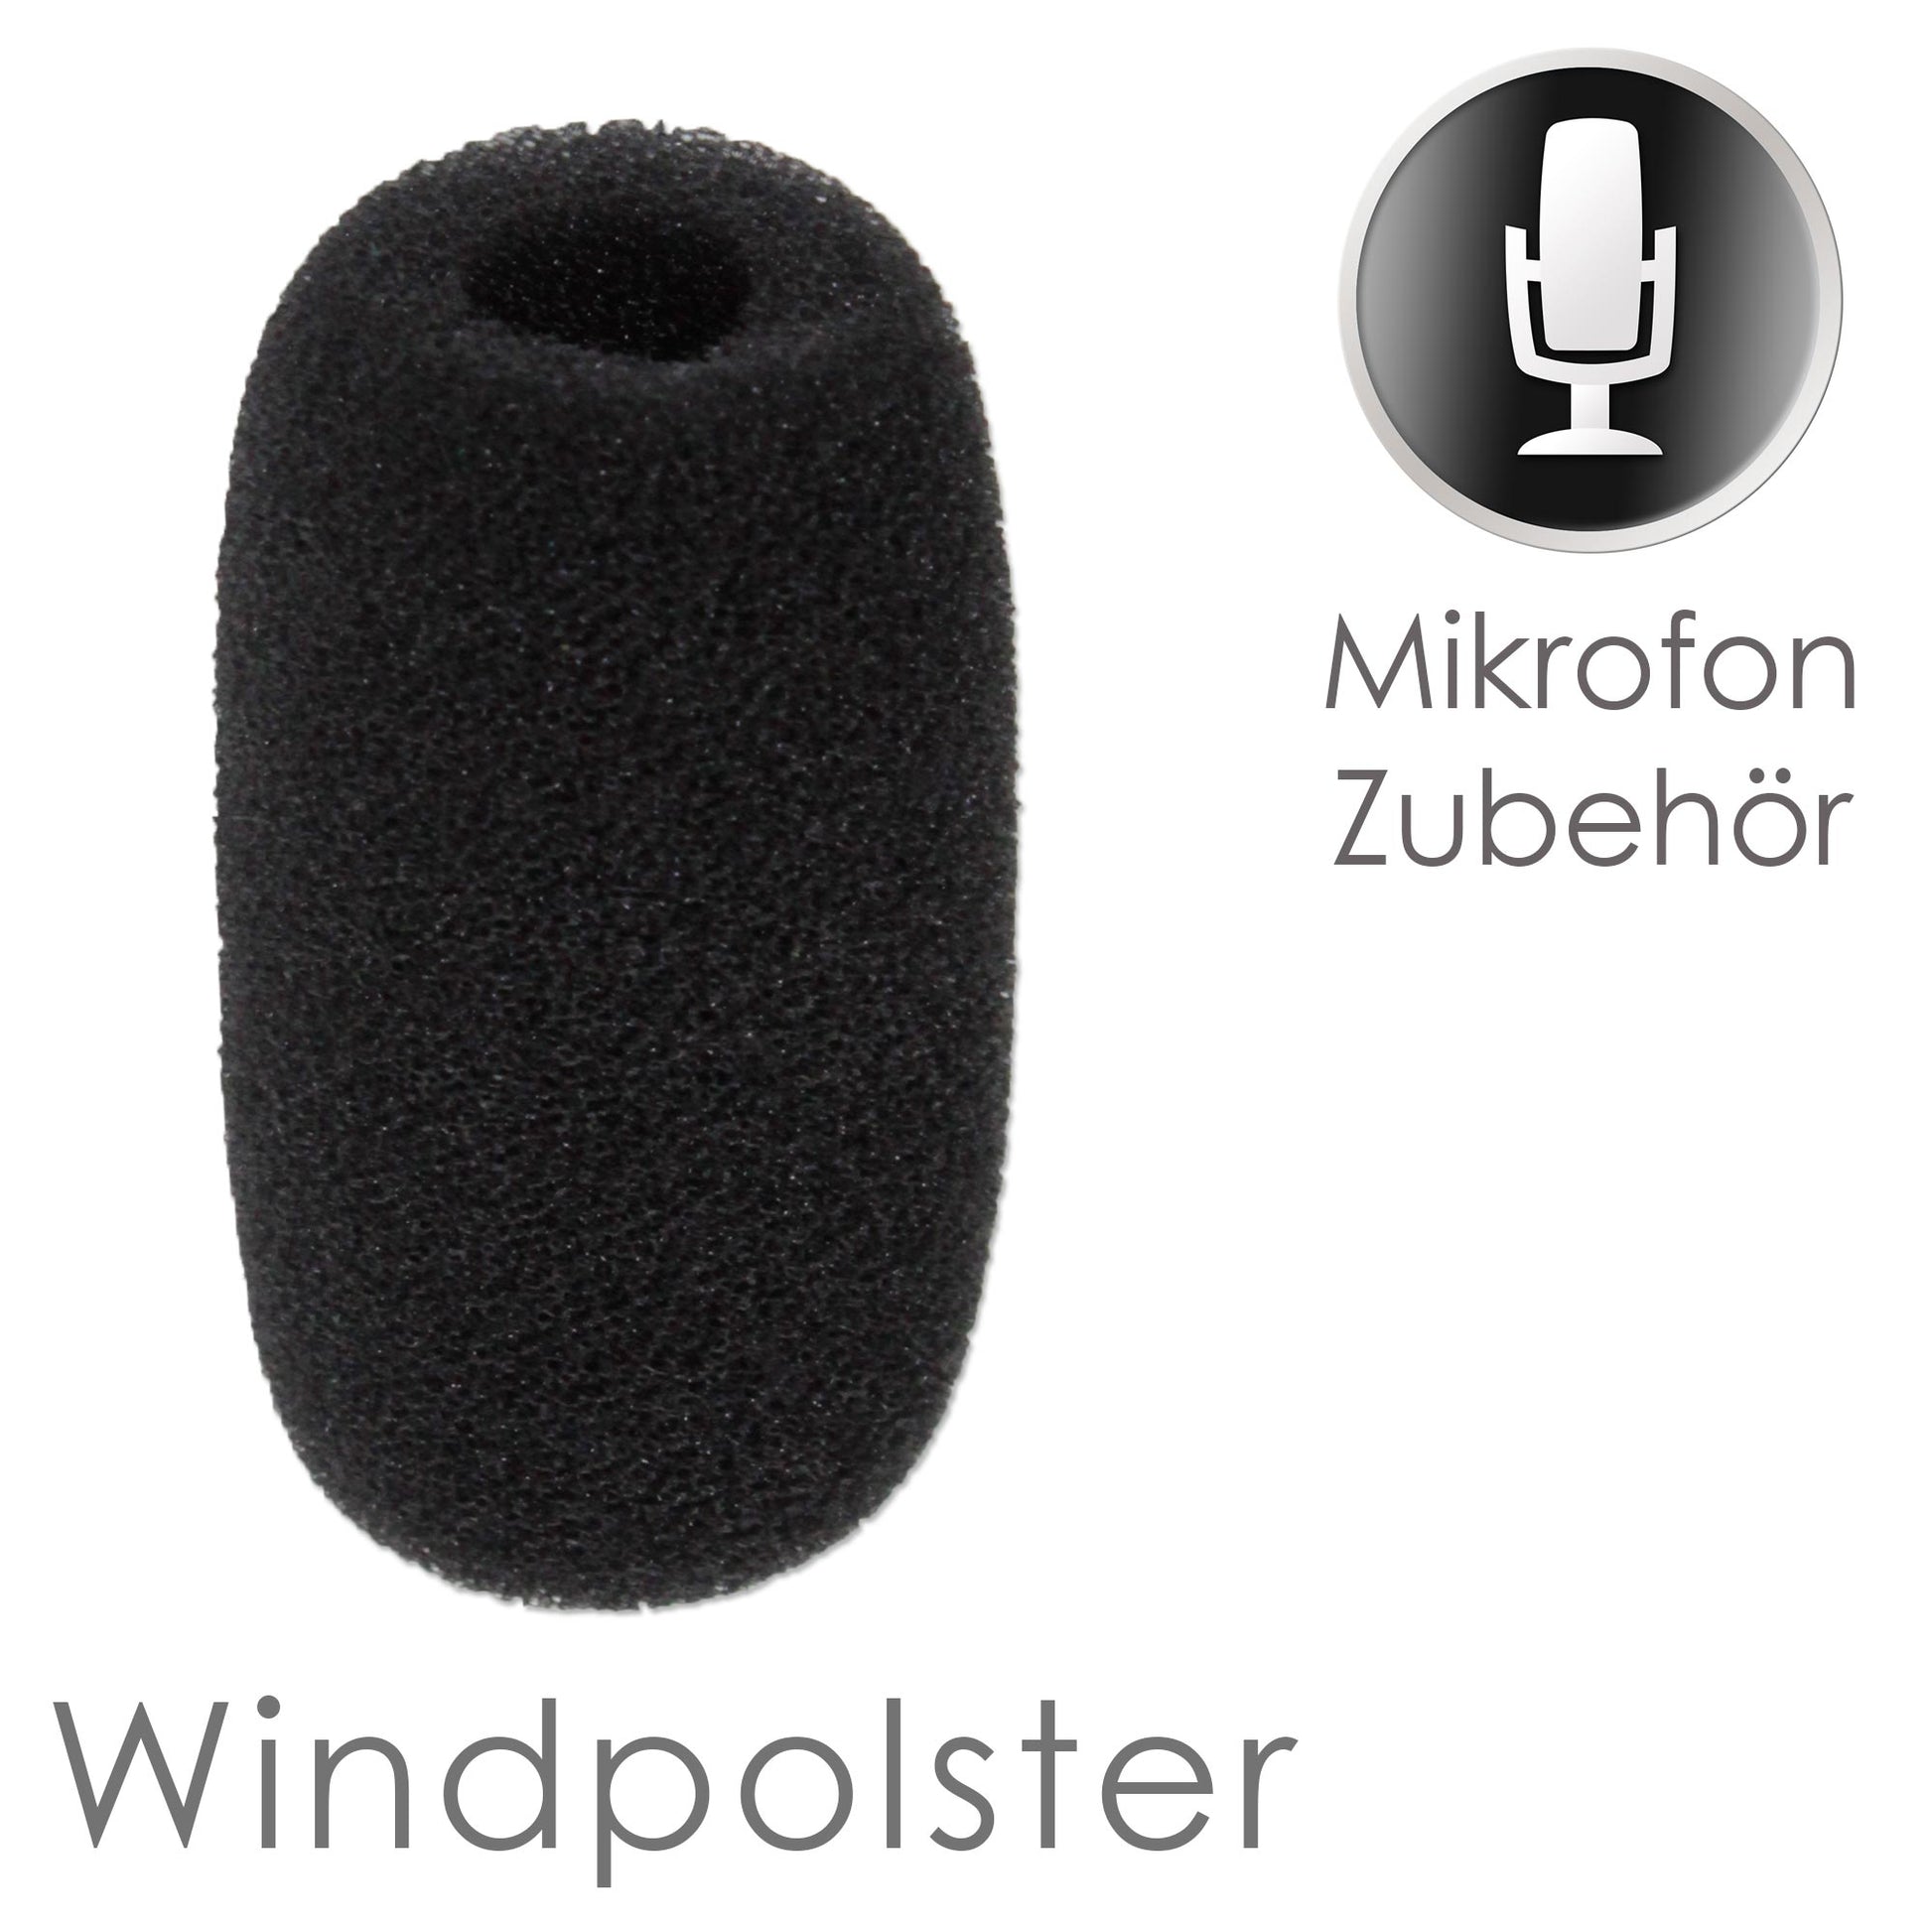 Interphone Windpolster für Mikrofone - Mikrofonschutz